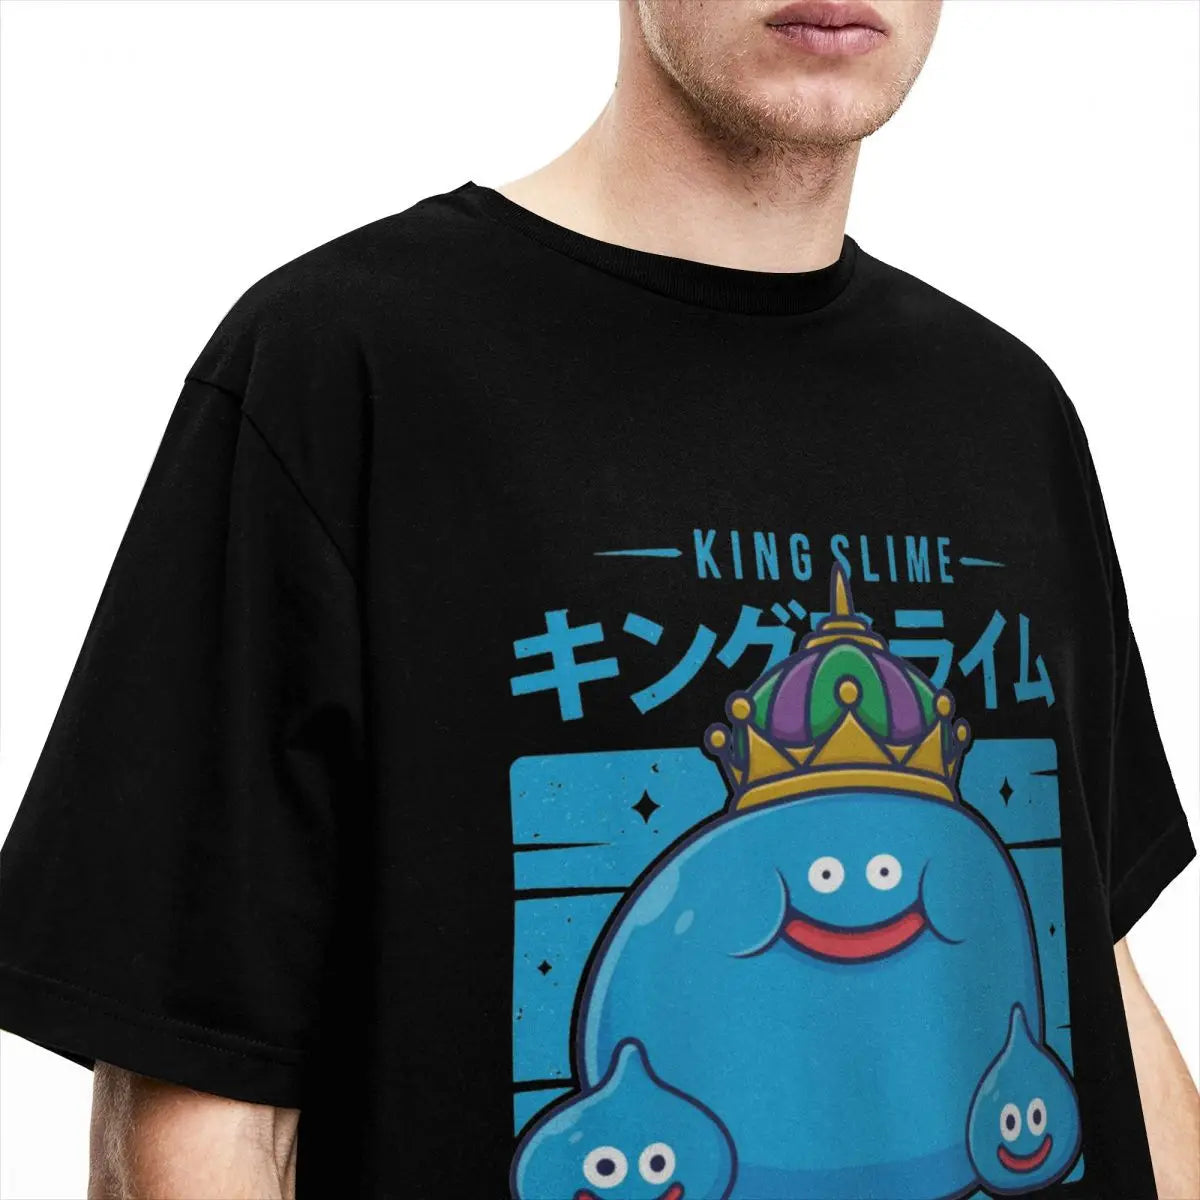 Amazing King Slime Games T-Shirt Men Women's O Neck 100% Cotton Cute Short Sleeve Tee Shirt Birthday Present Tops